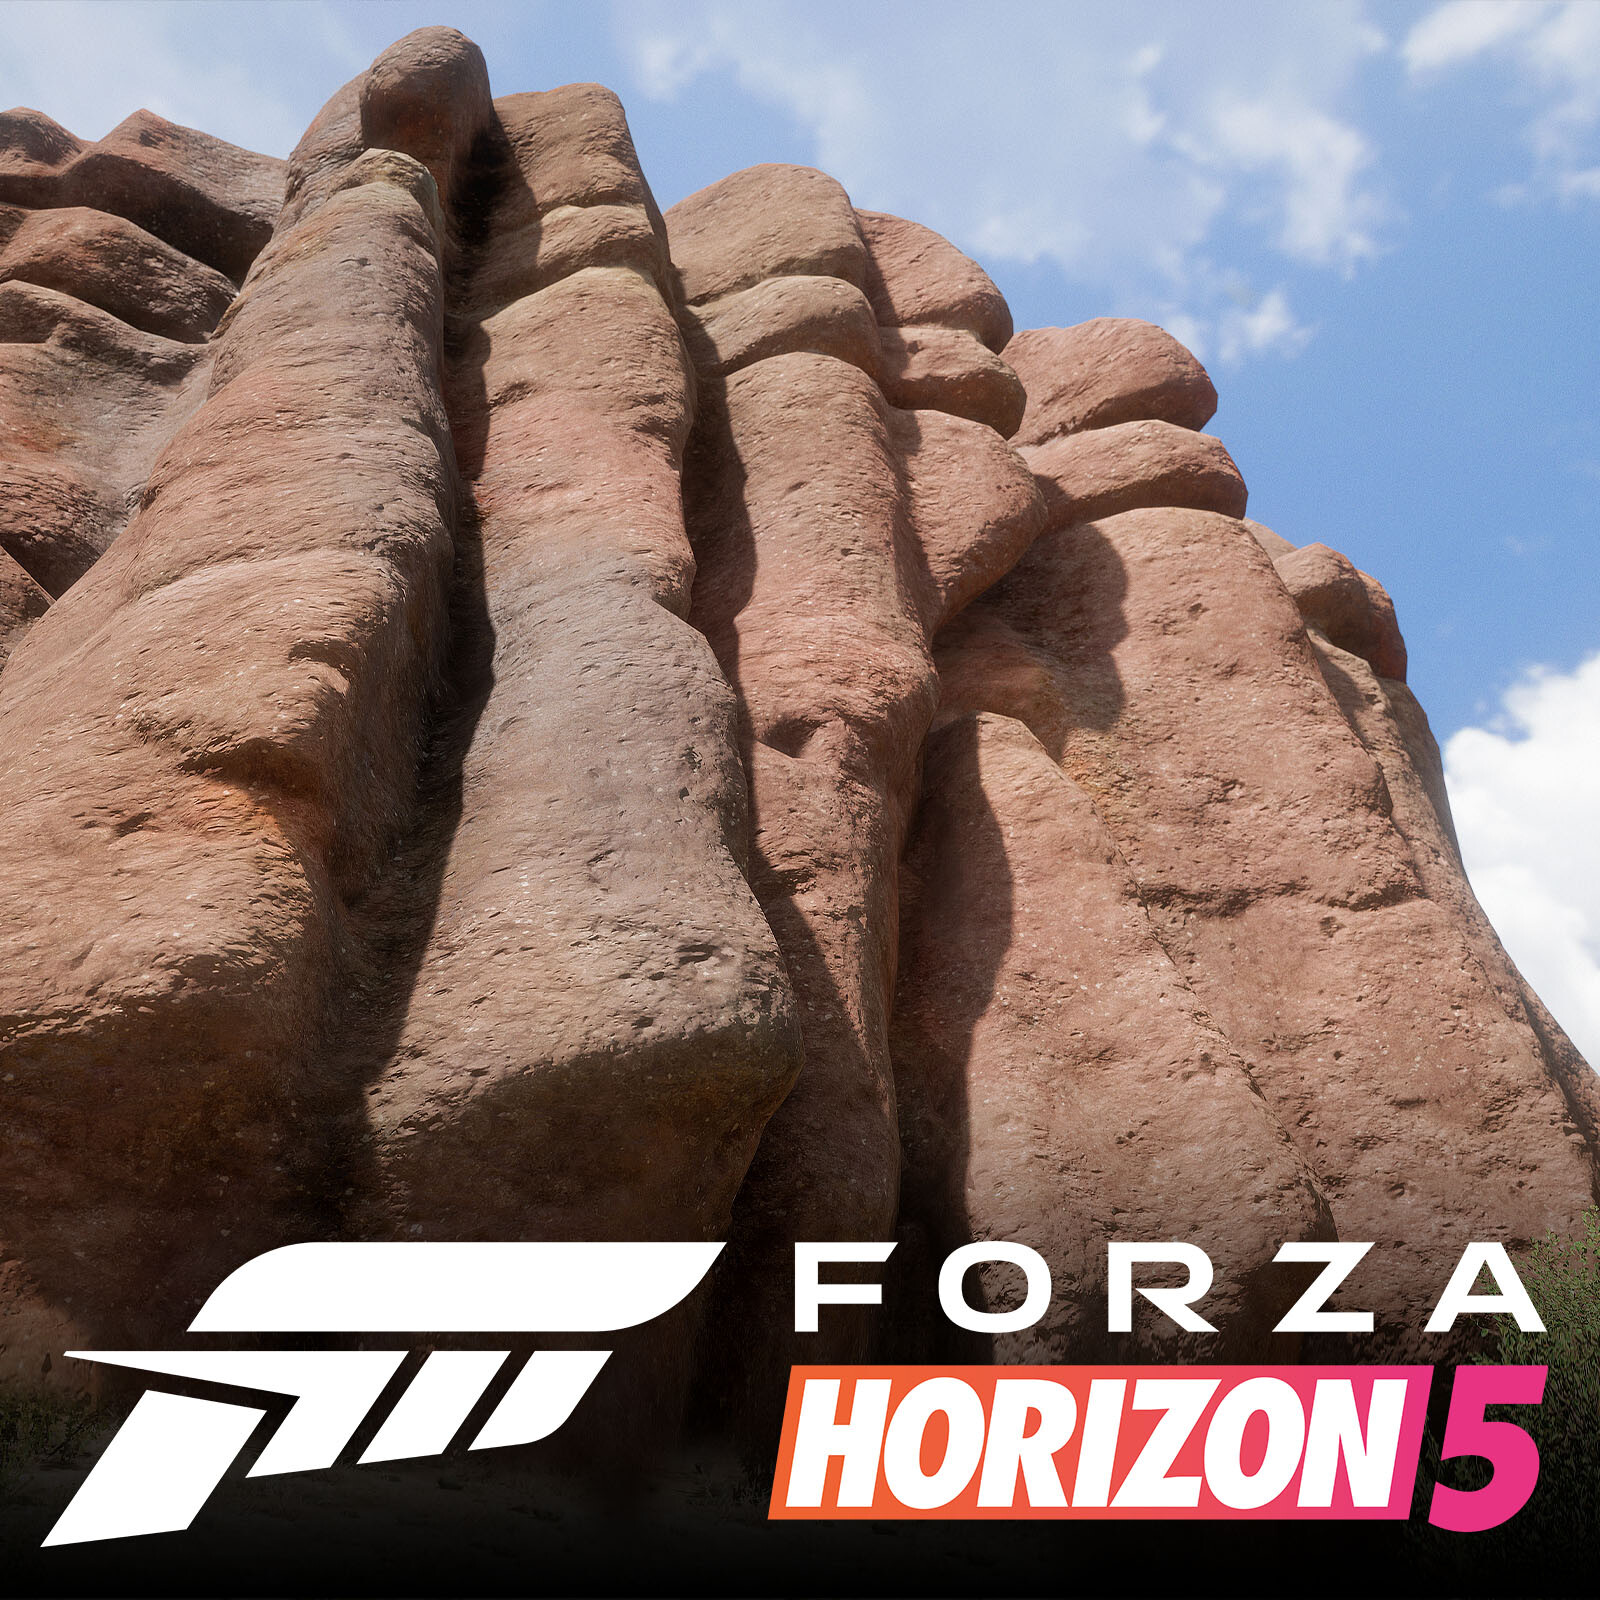 Where to find Valle De Las Ranas in Forza Horizon 5